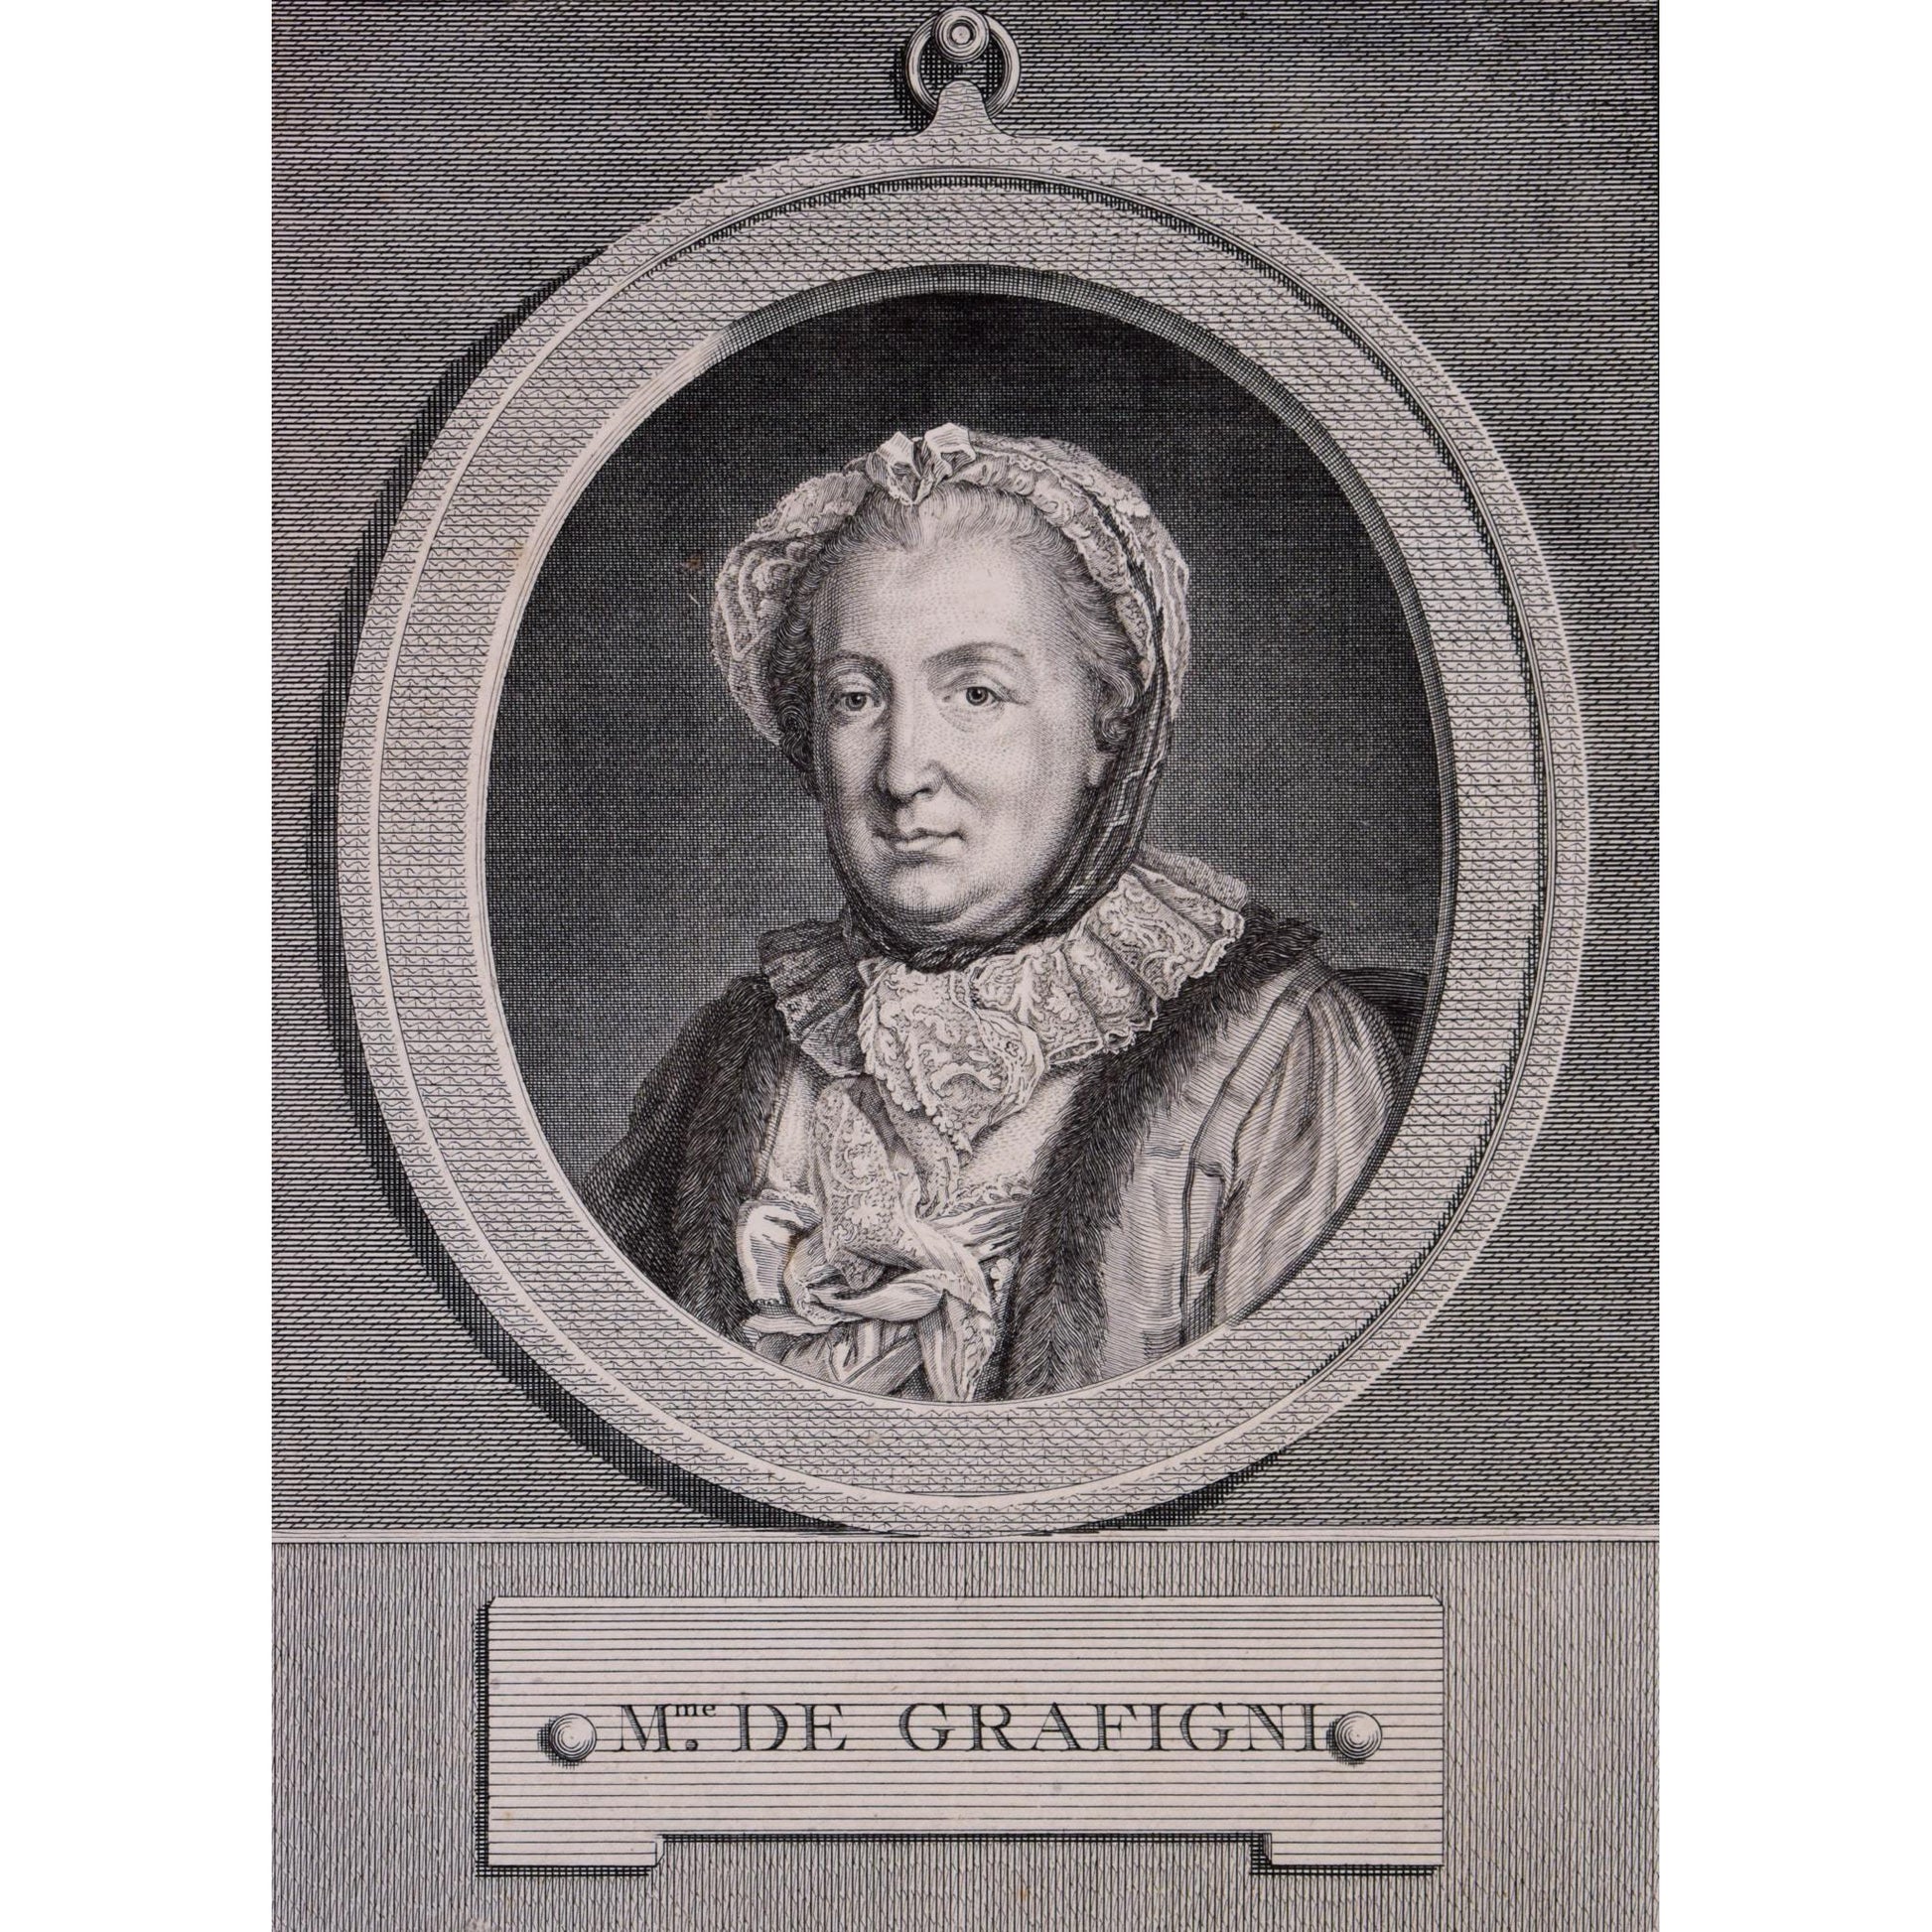 Antique etching portrait woman writer Graffigny original 1772 by Pierre Charles Leveque for sale at Winckelmann Gallery